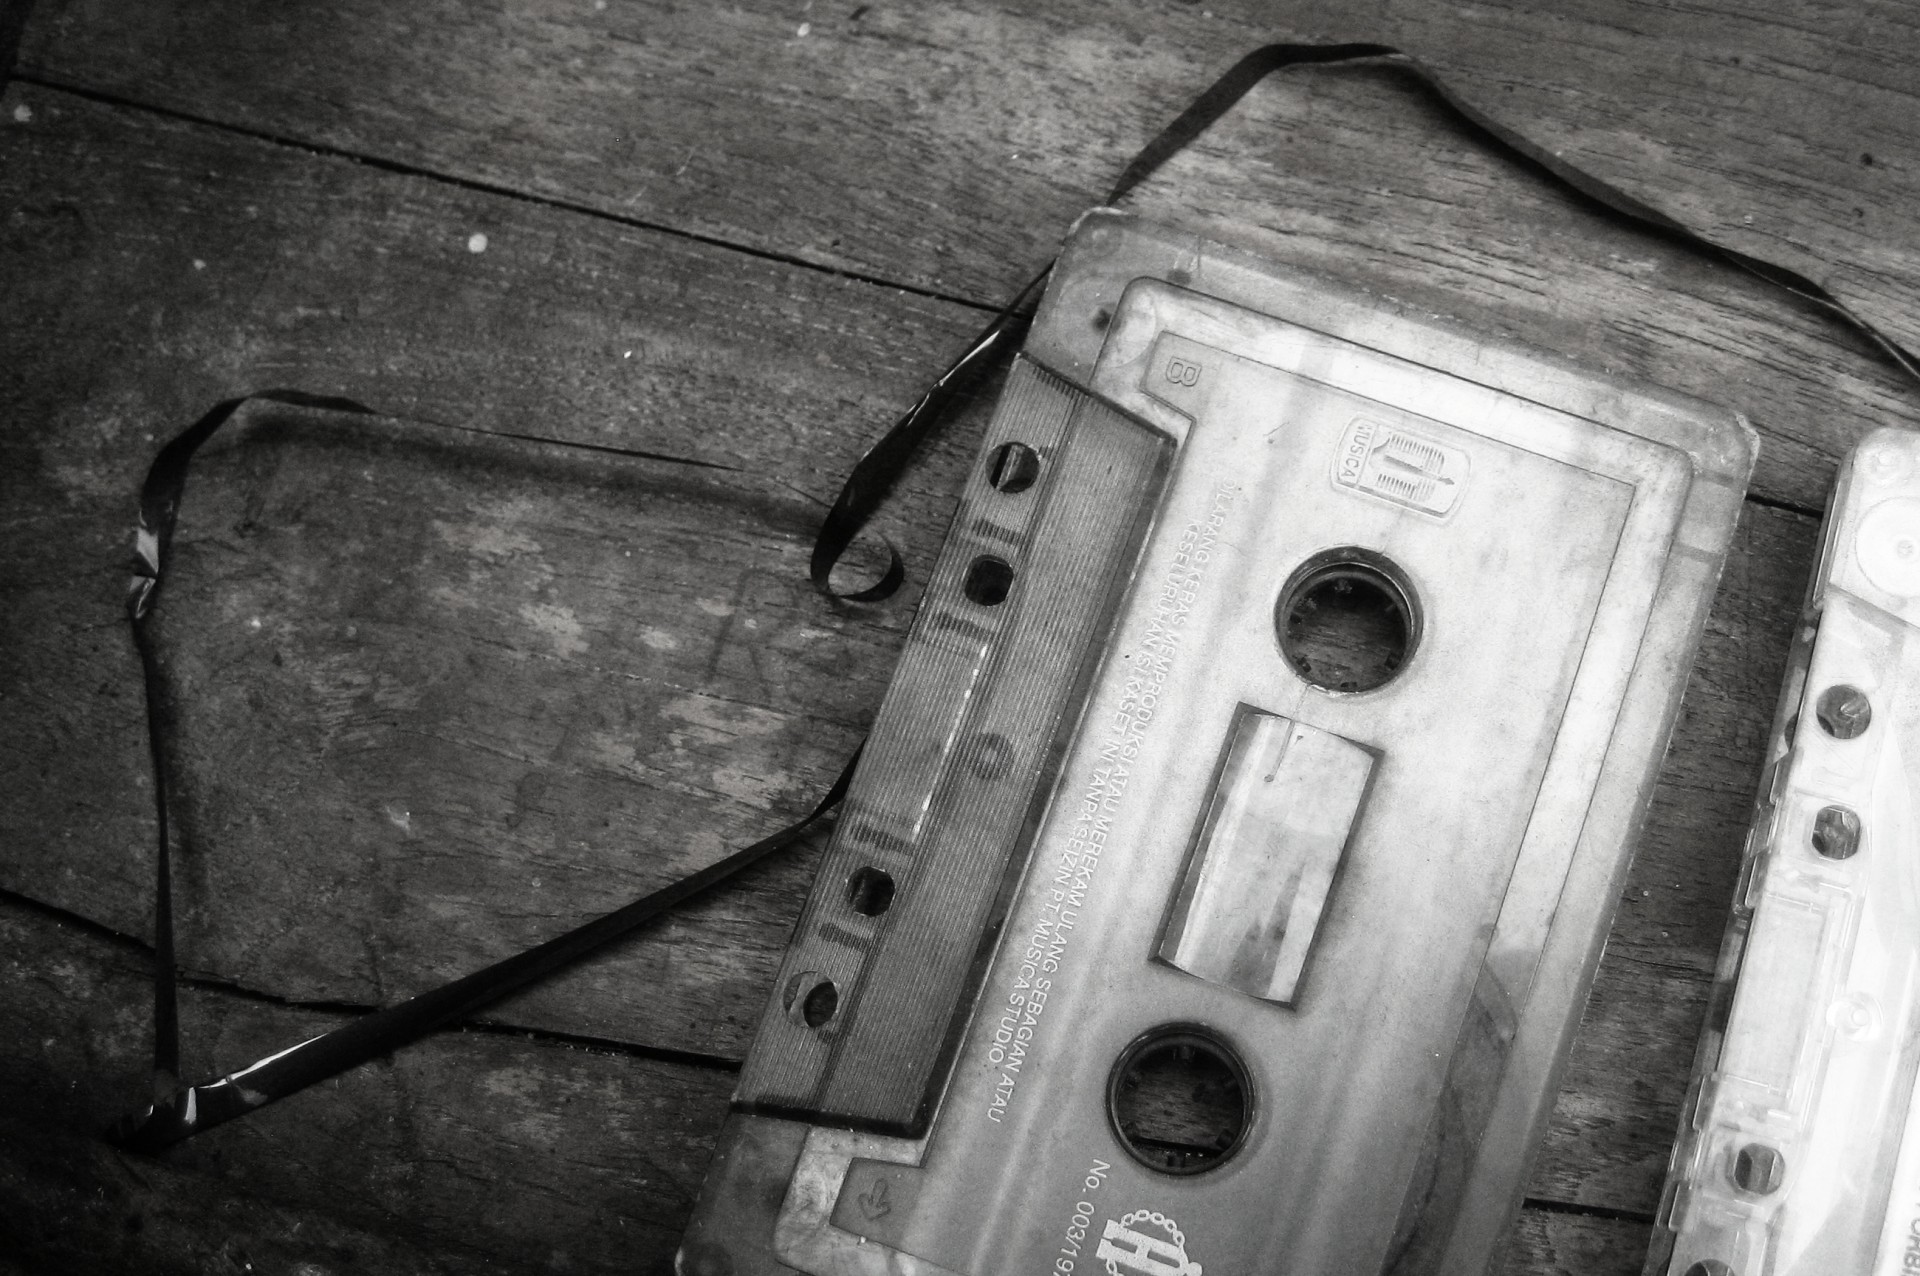 Old Cassette